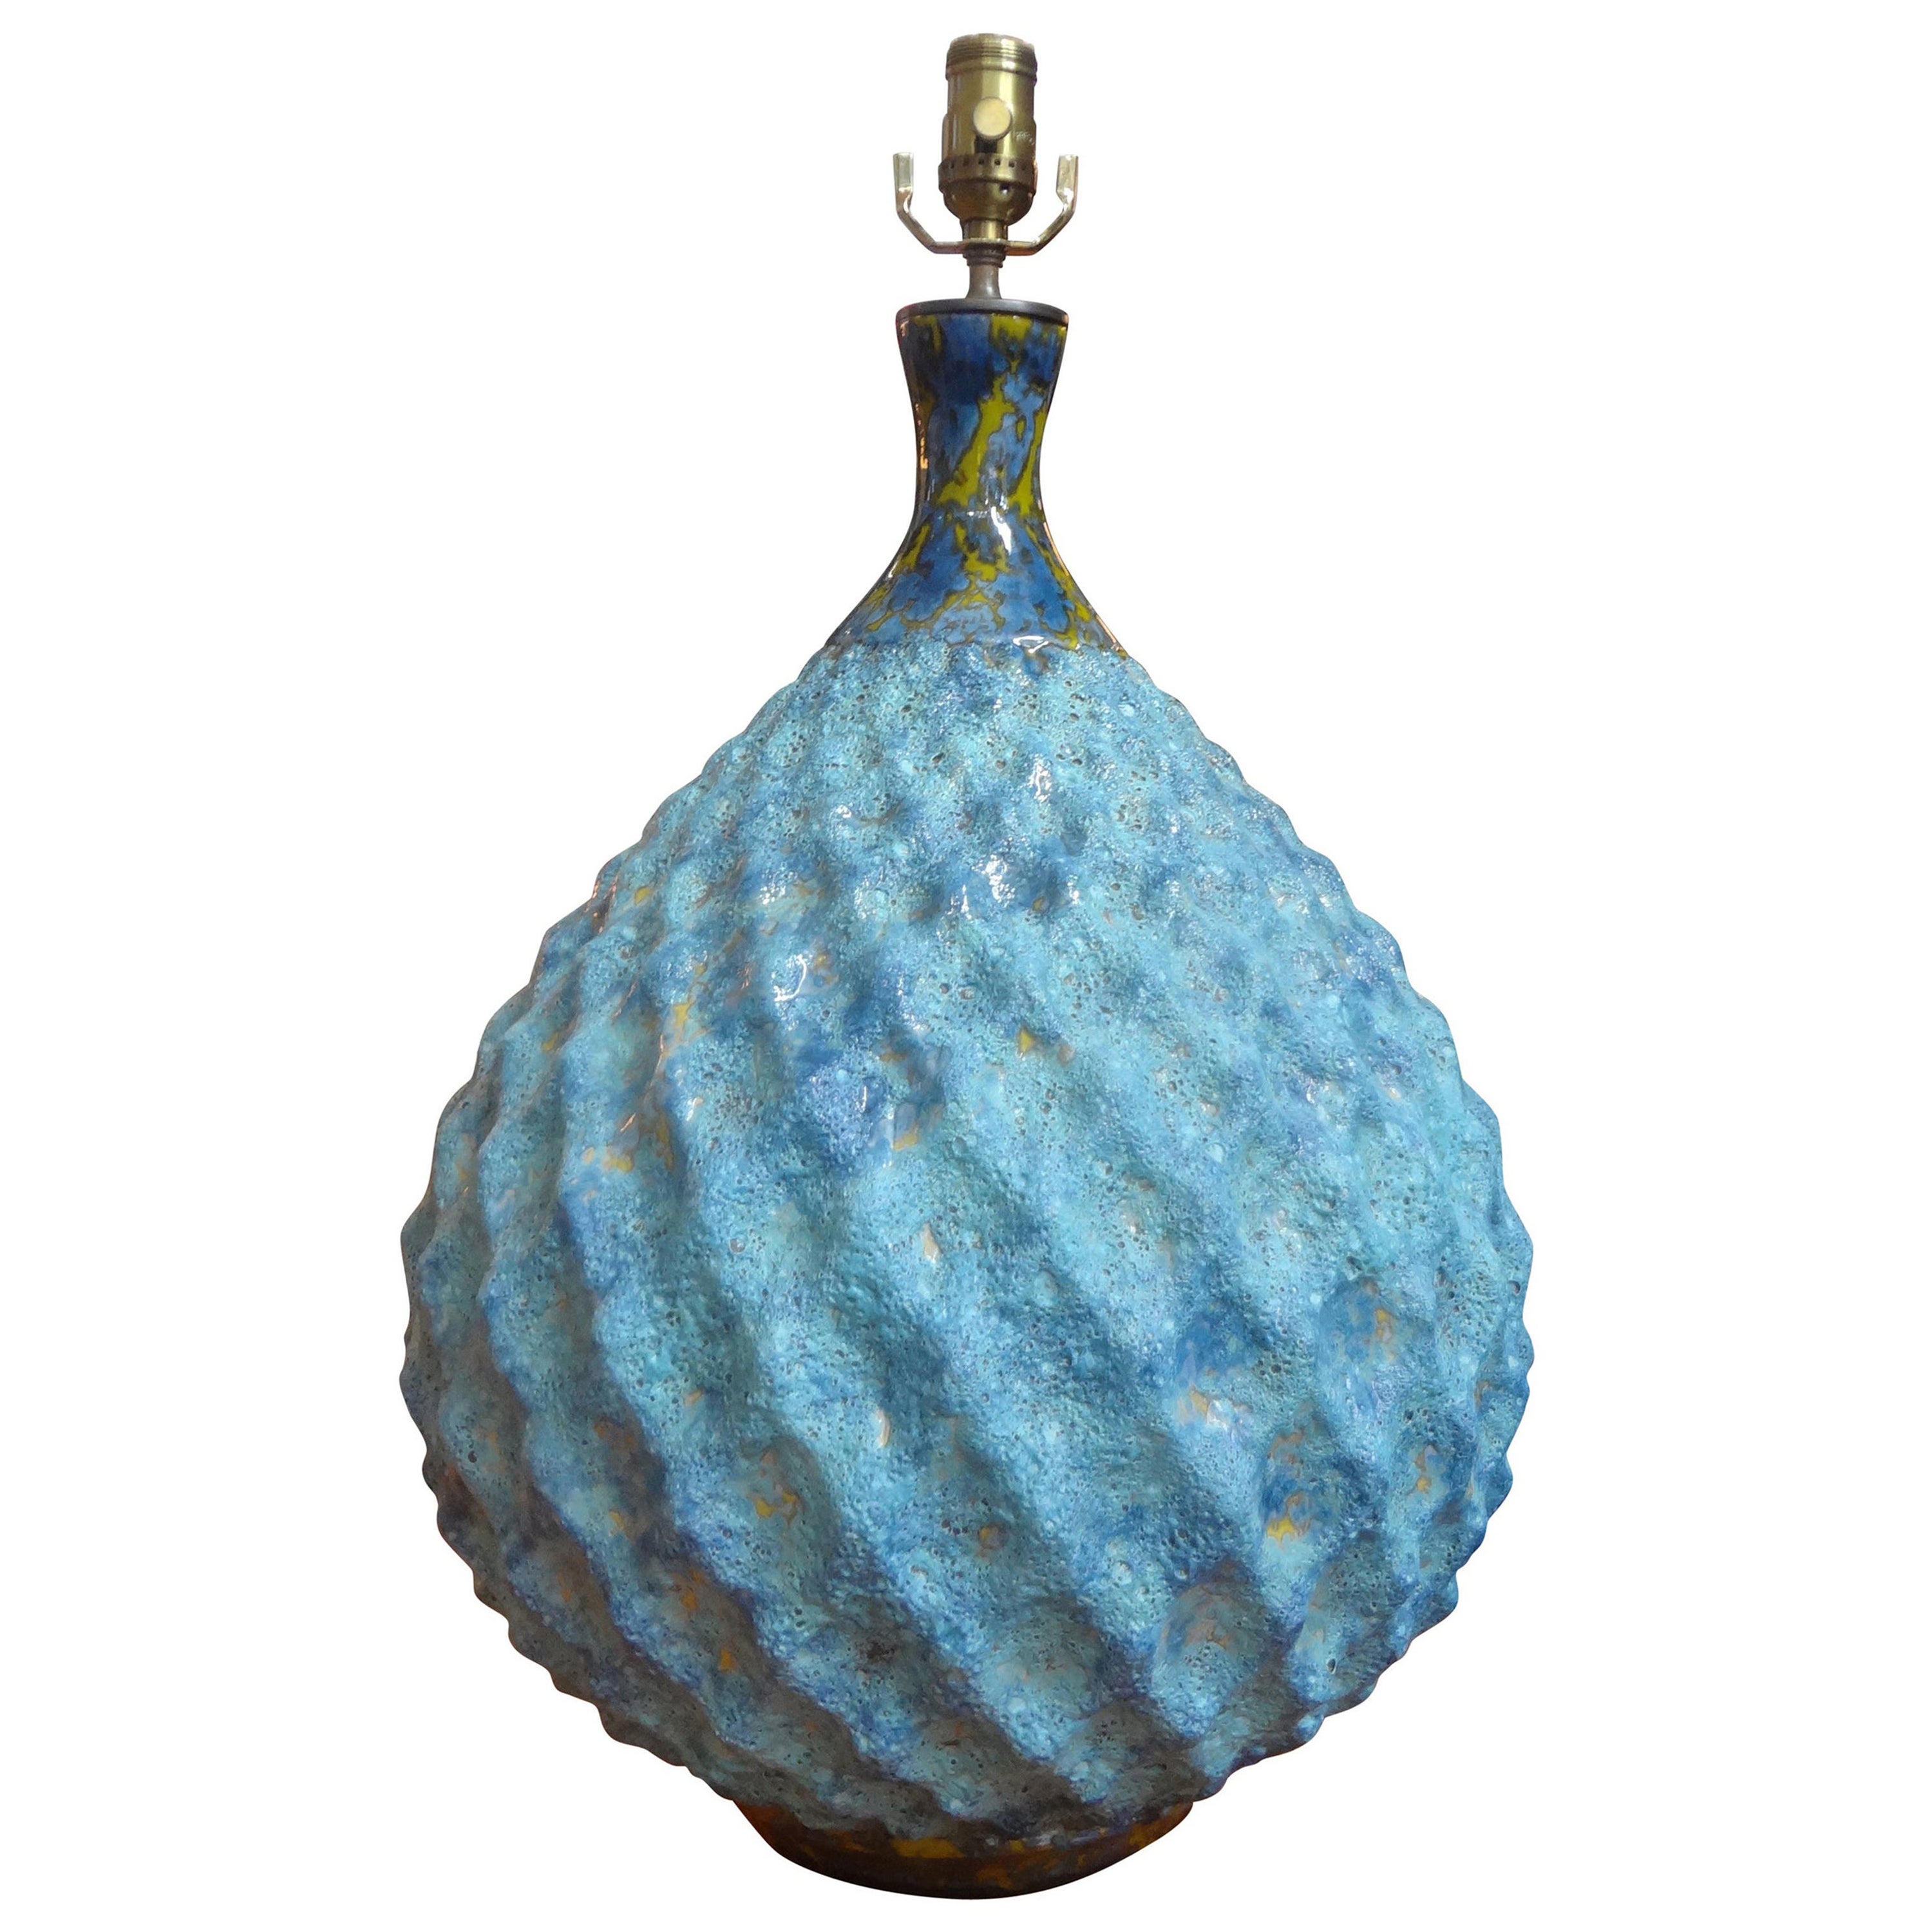 Midcentury, Glazed Pottery Artichoke Lamp